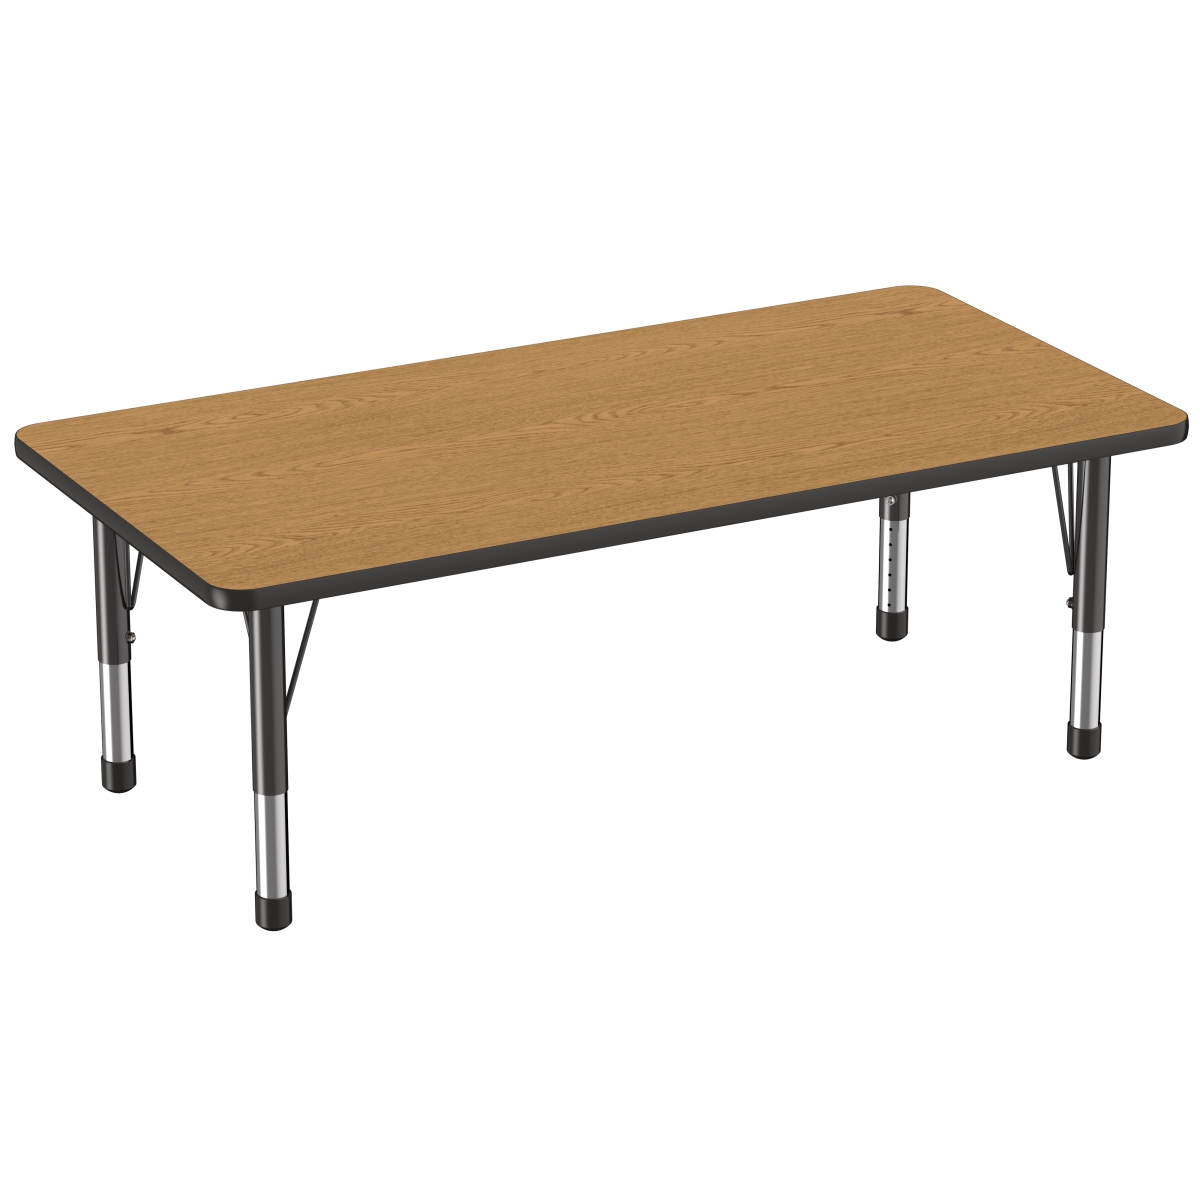 10025-okbk 30 X 60 In. Rectangle T-mold Adjustable Activity Table With Chunky Leg - Oak & Black